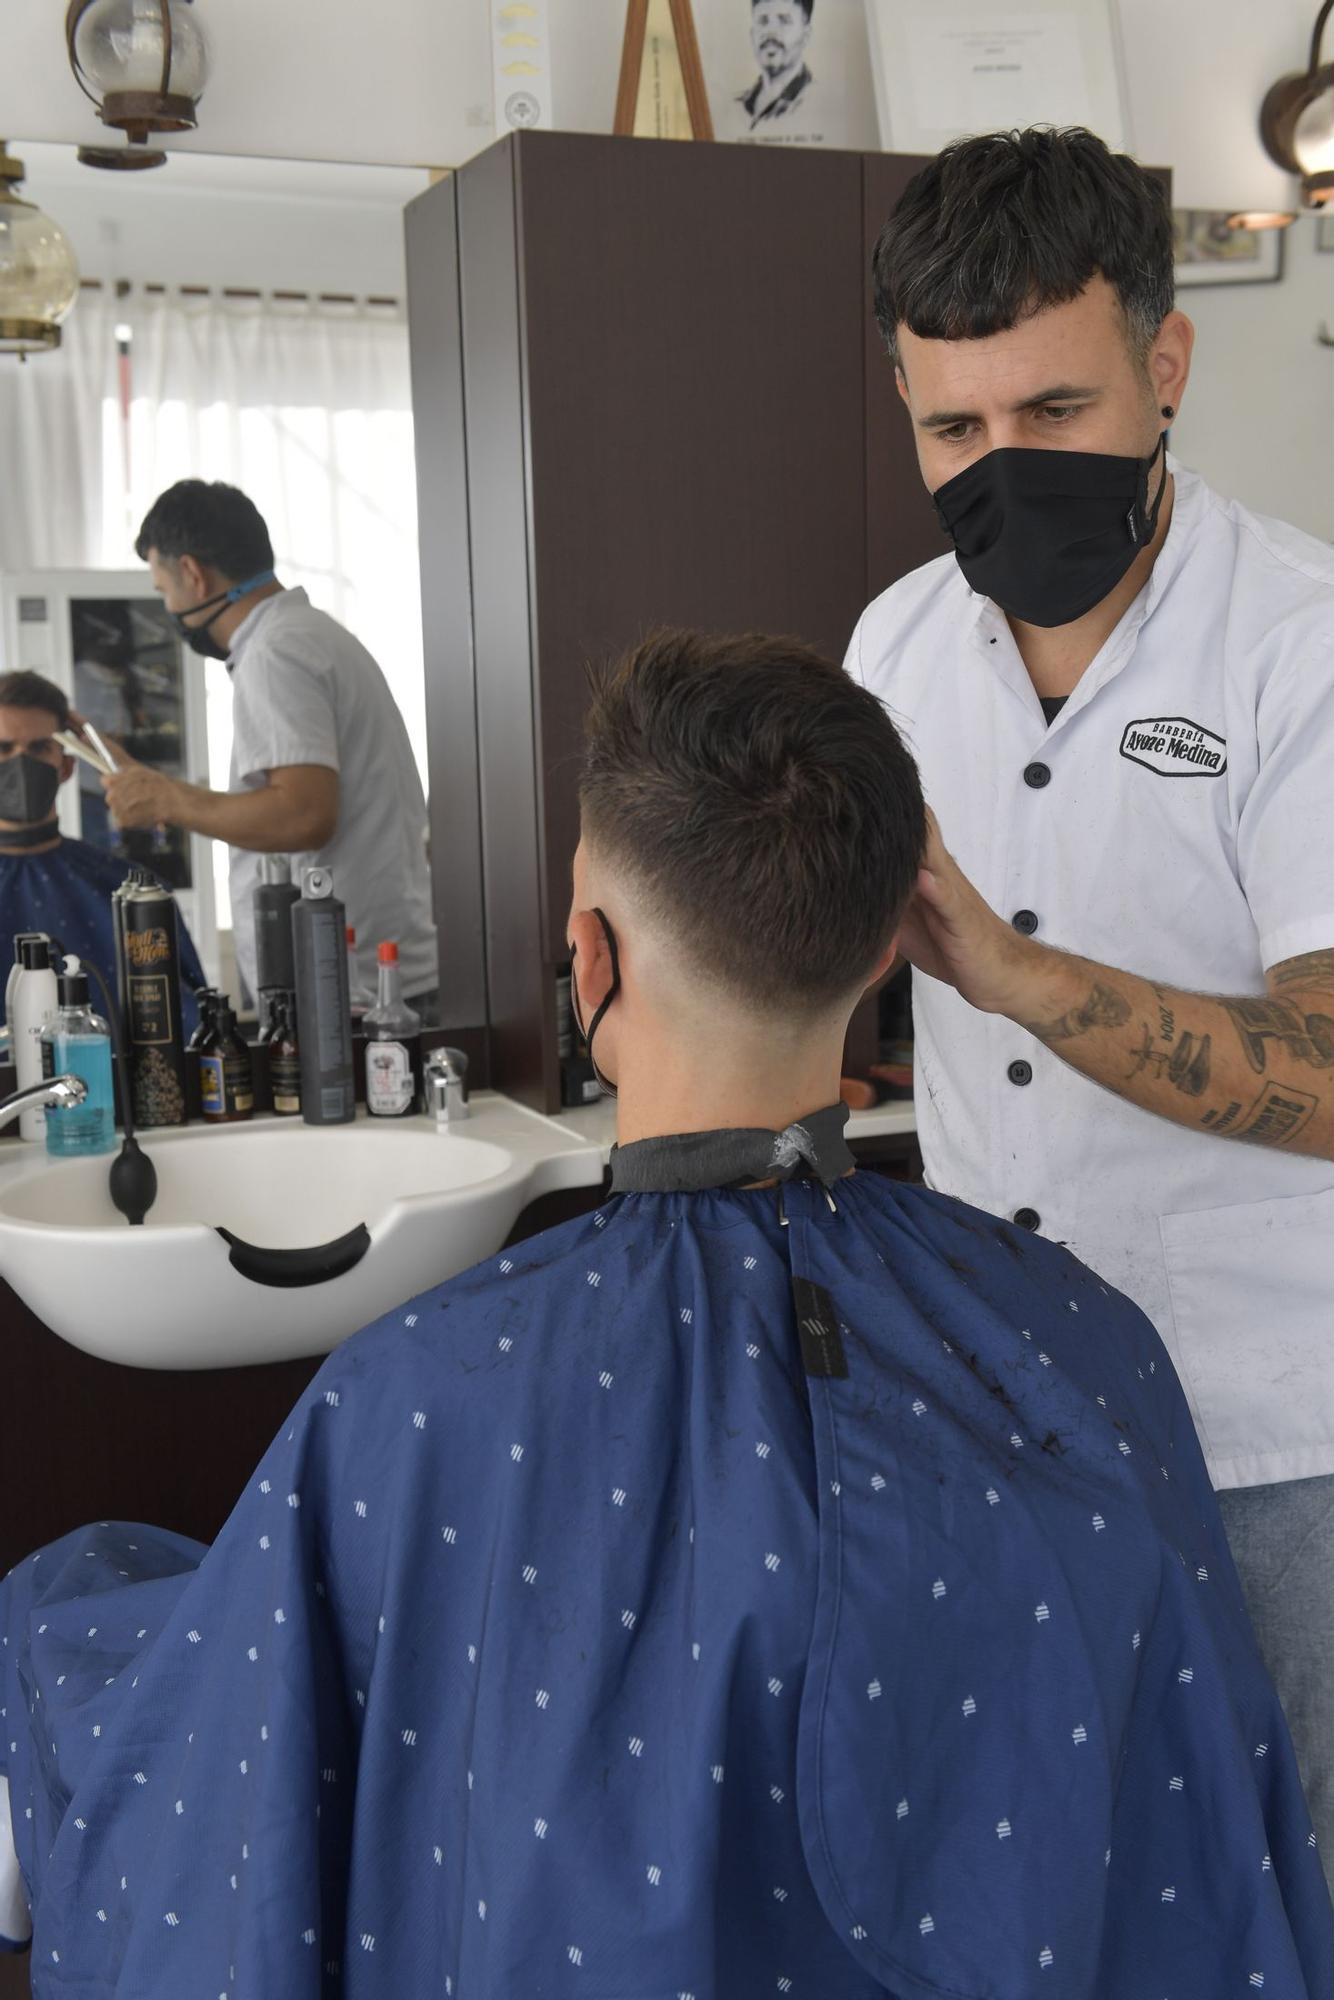 Ayoze Medina, subcampeón internacional de peluquería